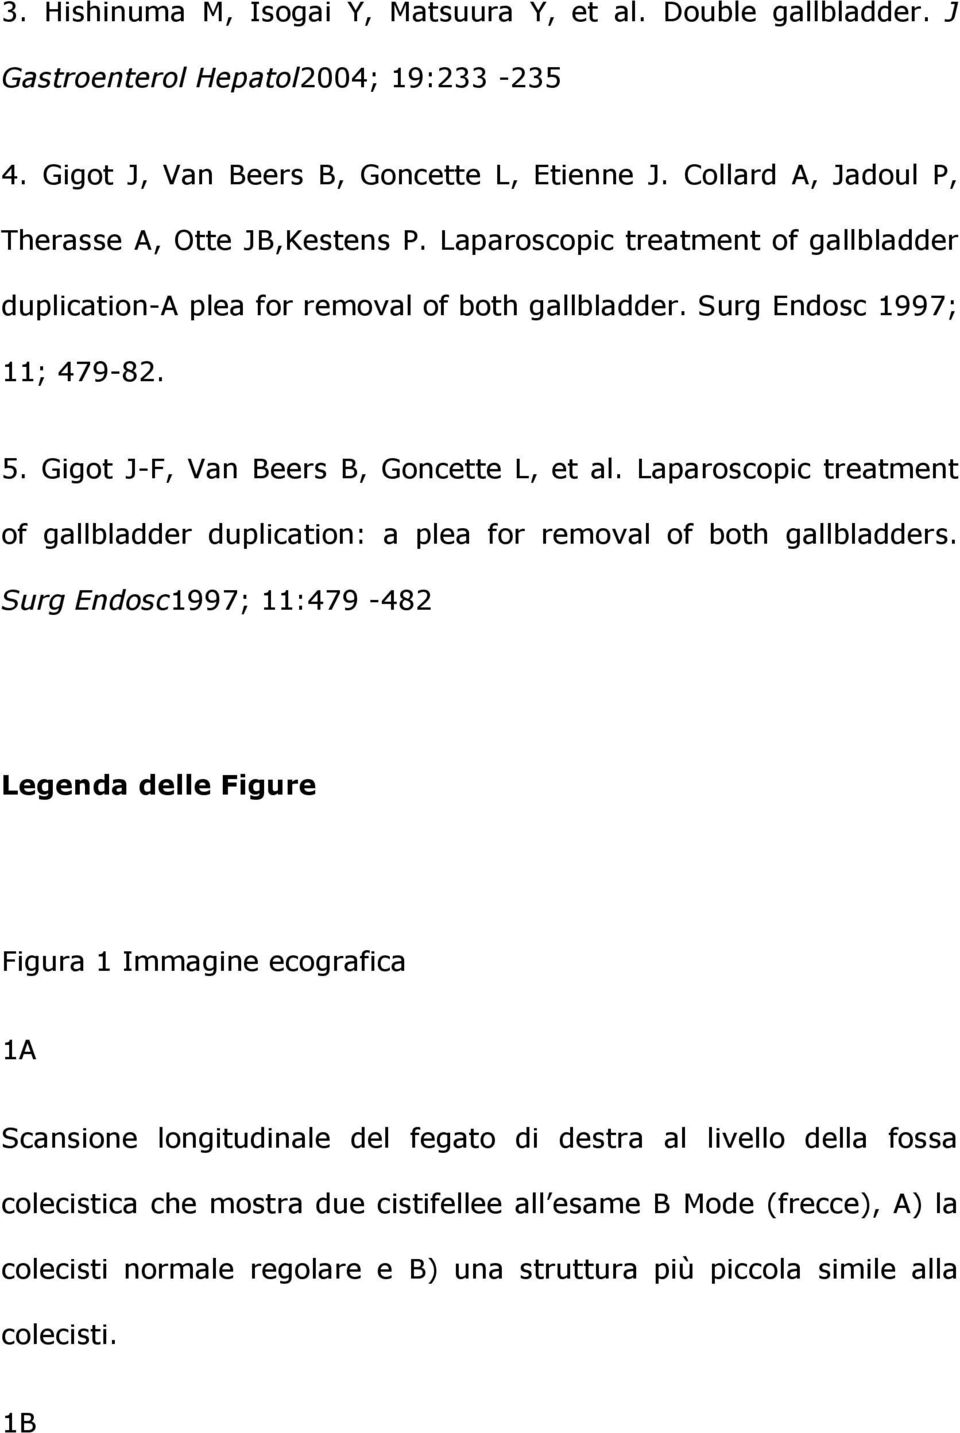 Gigot J-F, Van Beers B, Goncette L, et al. Laparoscopic treatment of gallbladder duplication: a plea for removal of both gallbladders.